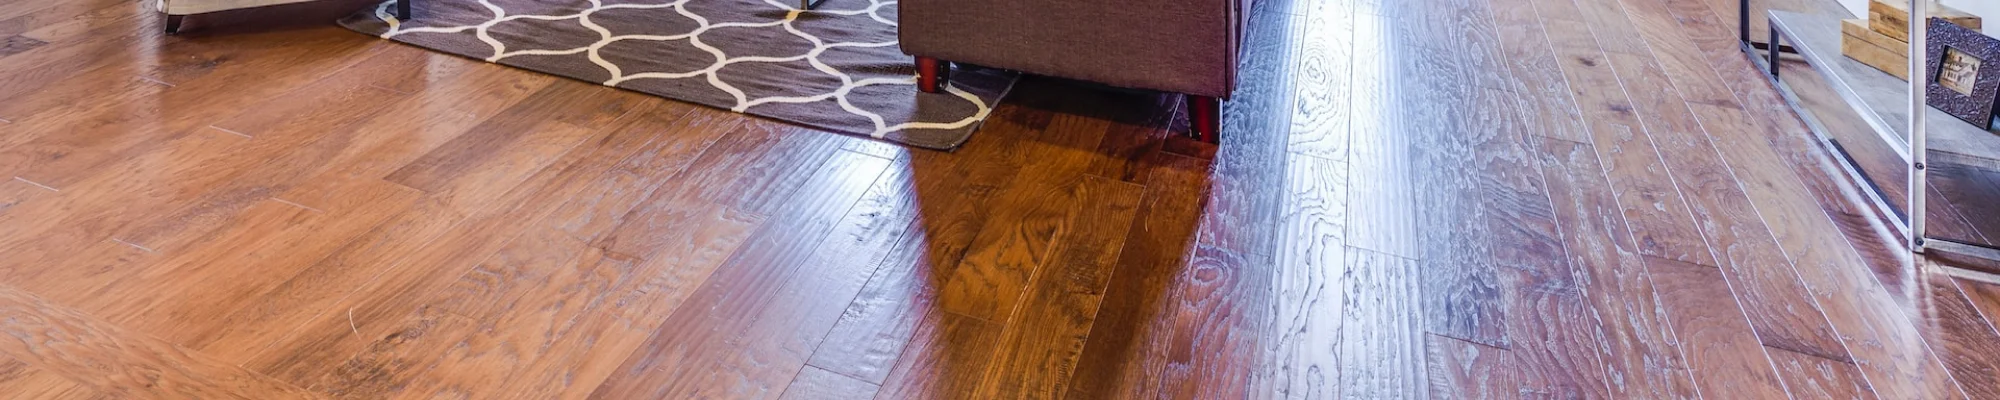 Hardwood flooring options inn Rochester NY at Christie Carpets & Blinds